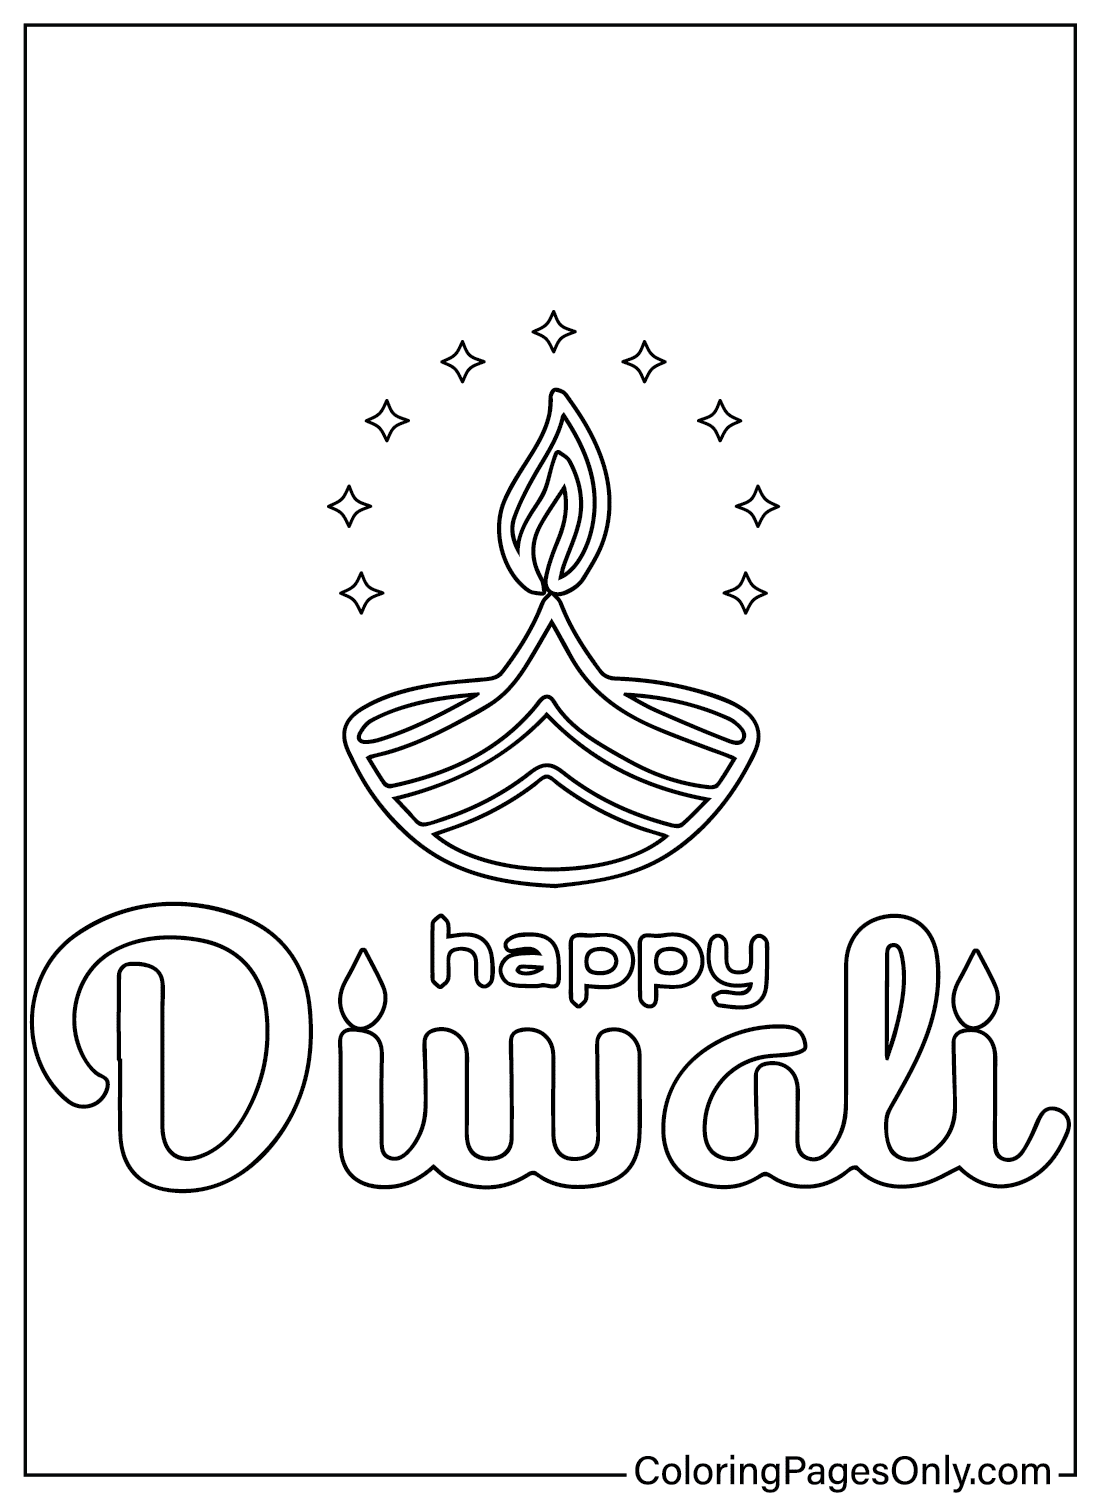 Kleurplaat voor Diwali van Diwali